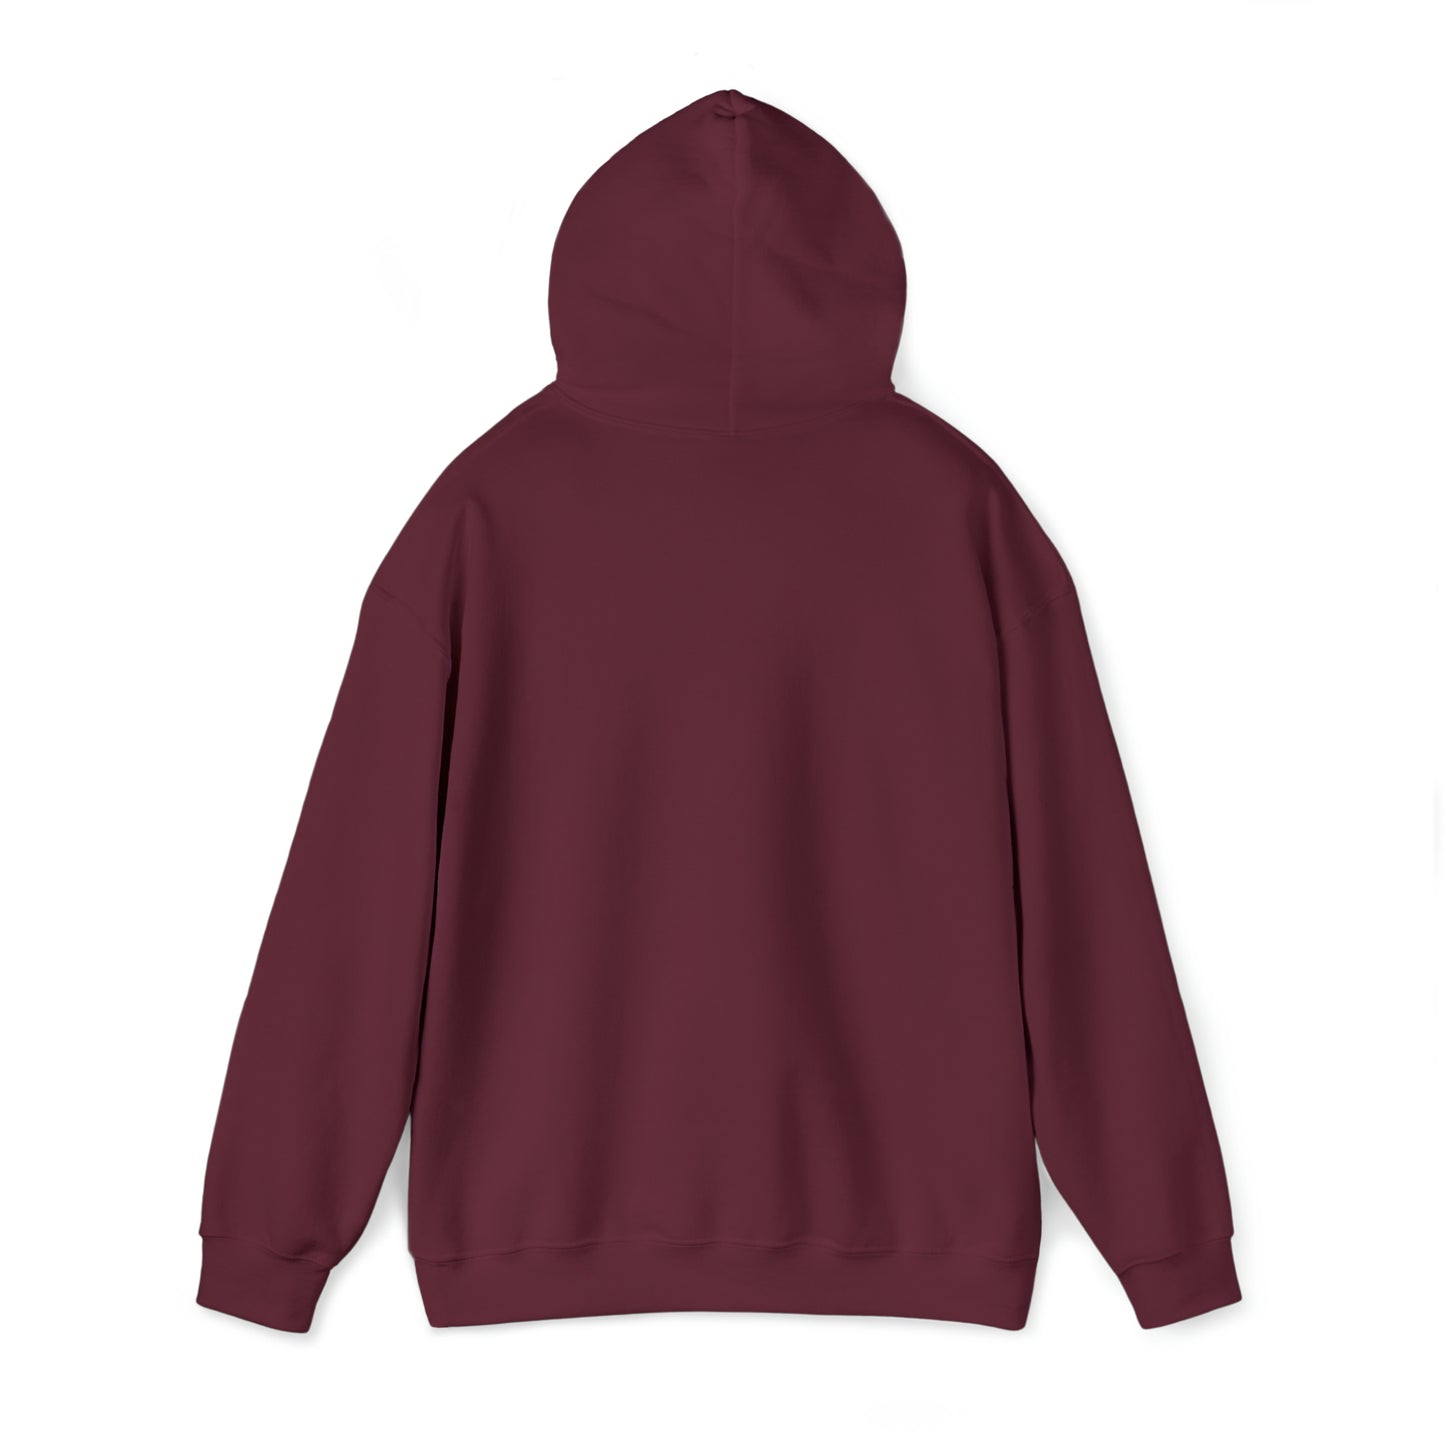 Talk To God Unisex Heavy Blend™ Hooded Sweatshirt